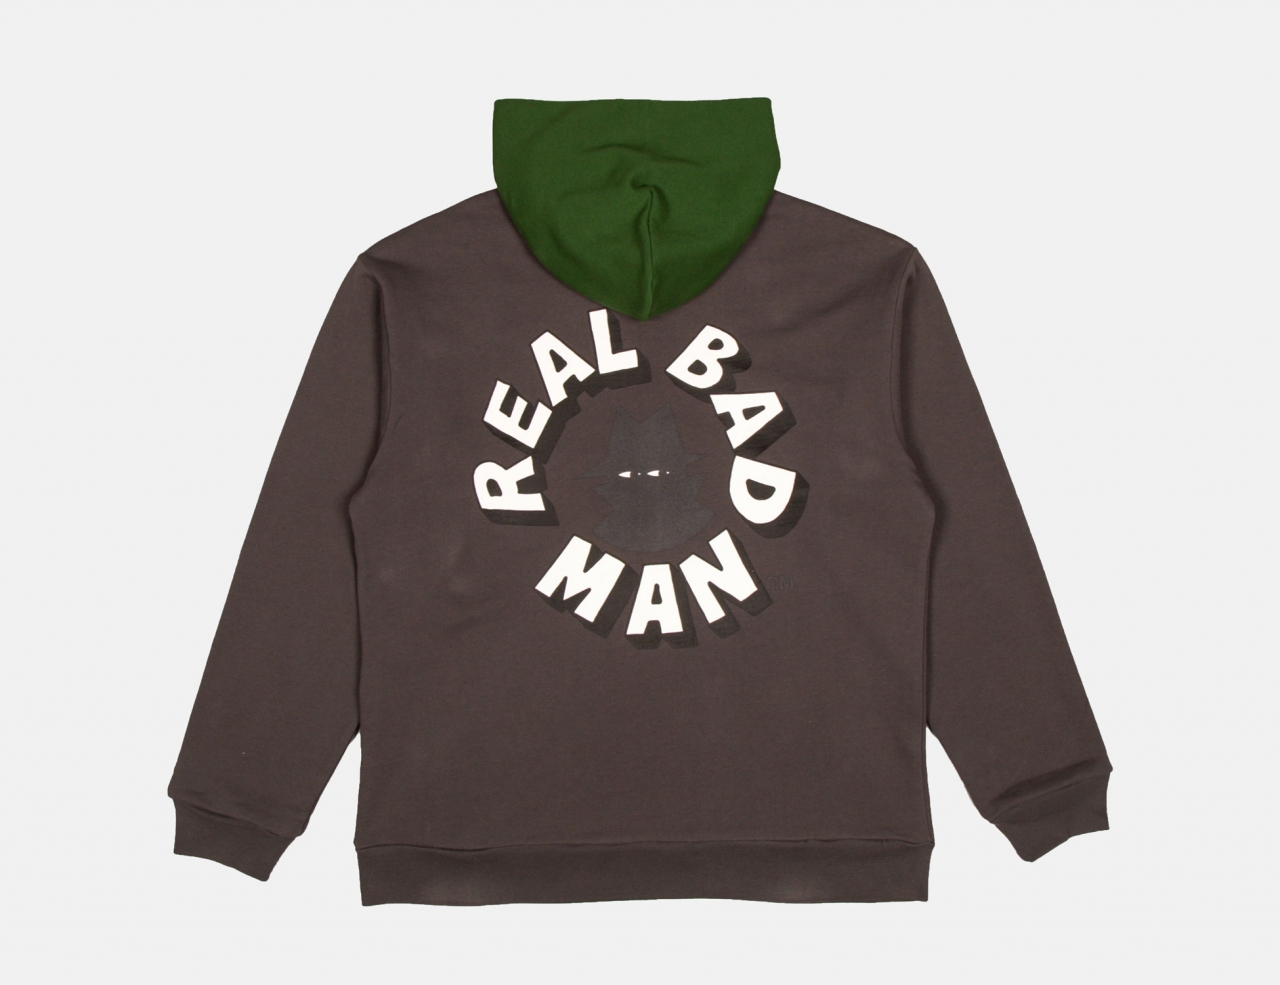 Real Bad Man RBM Hoodie - Washed Black